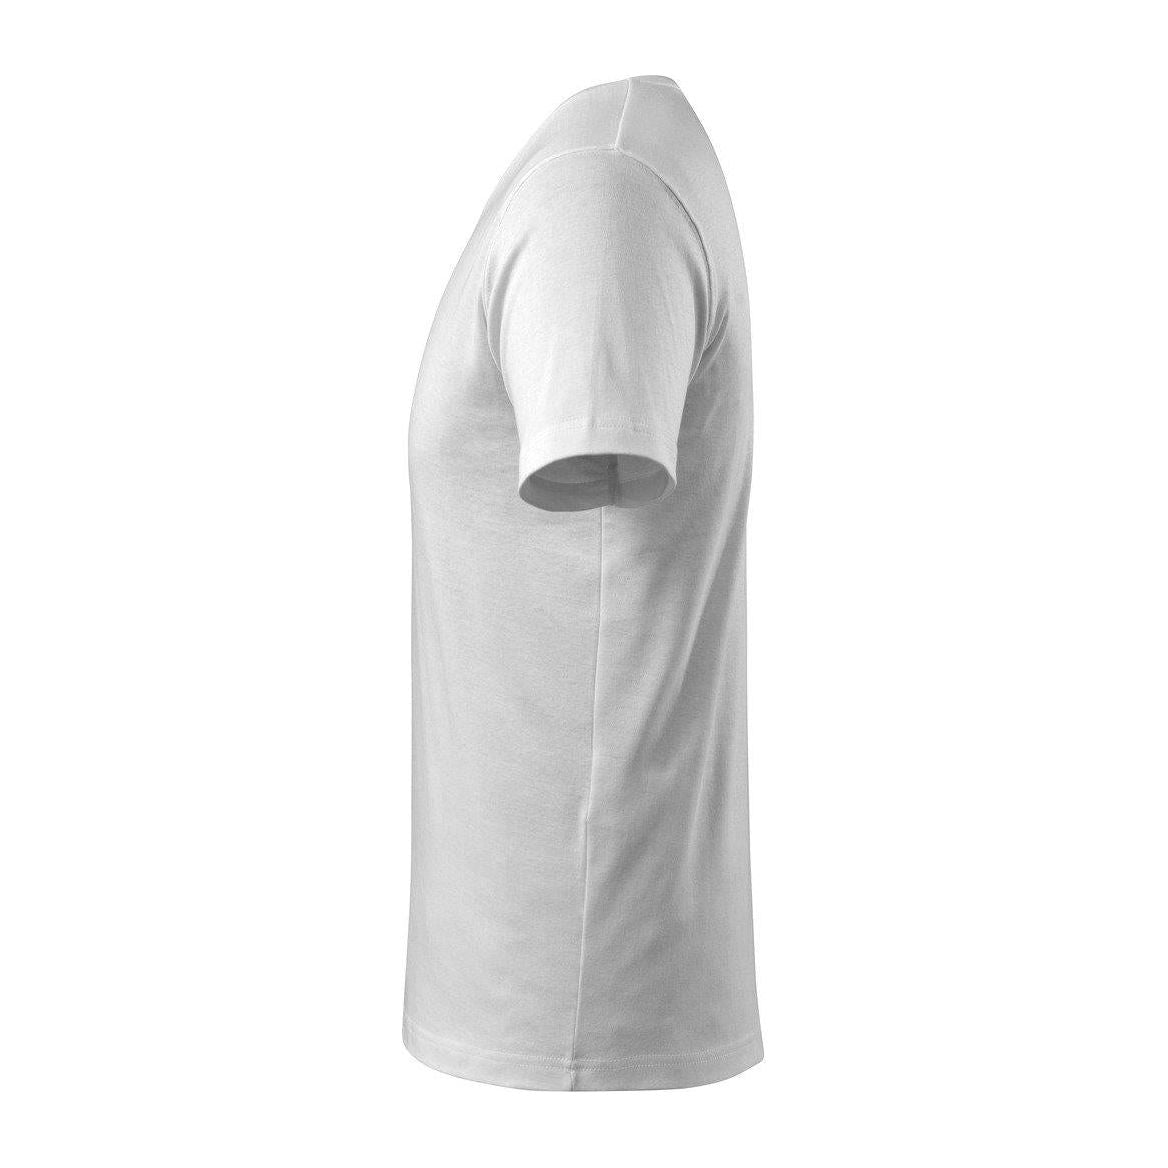 Mascot Vence T-shirt Slim-Fit White 51585-967-06 Side